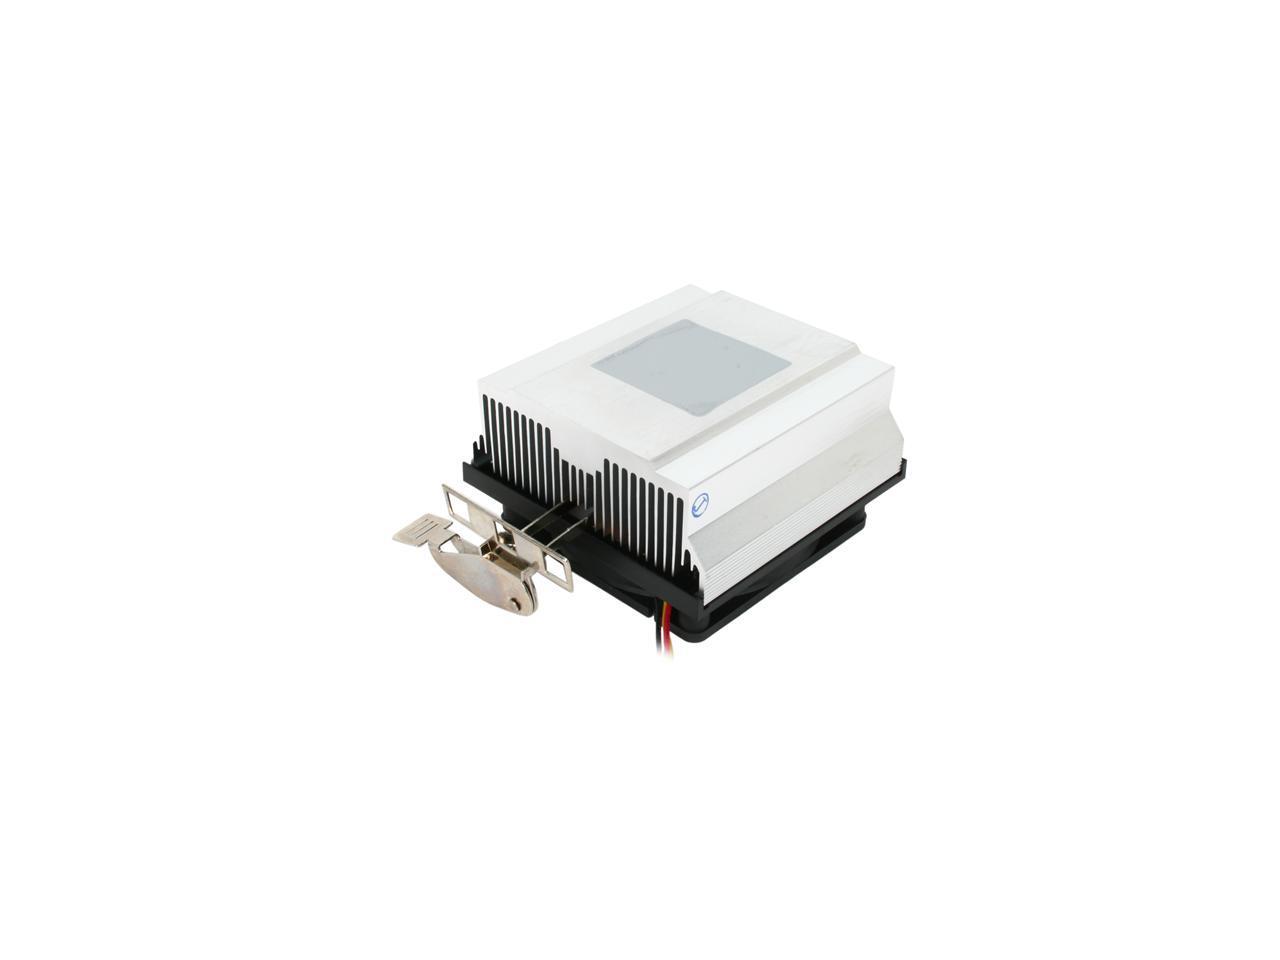 Thermaltake Cl-P0503 Cpu Cooler For Amd Socket Fm2/Fm1/Am3+/Am3/Am2+/Am2/K8